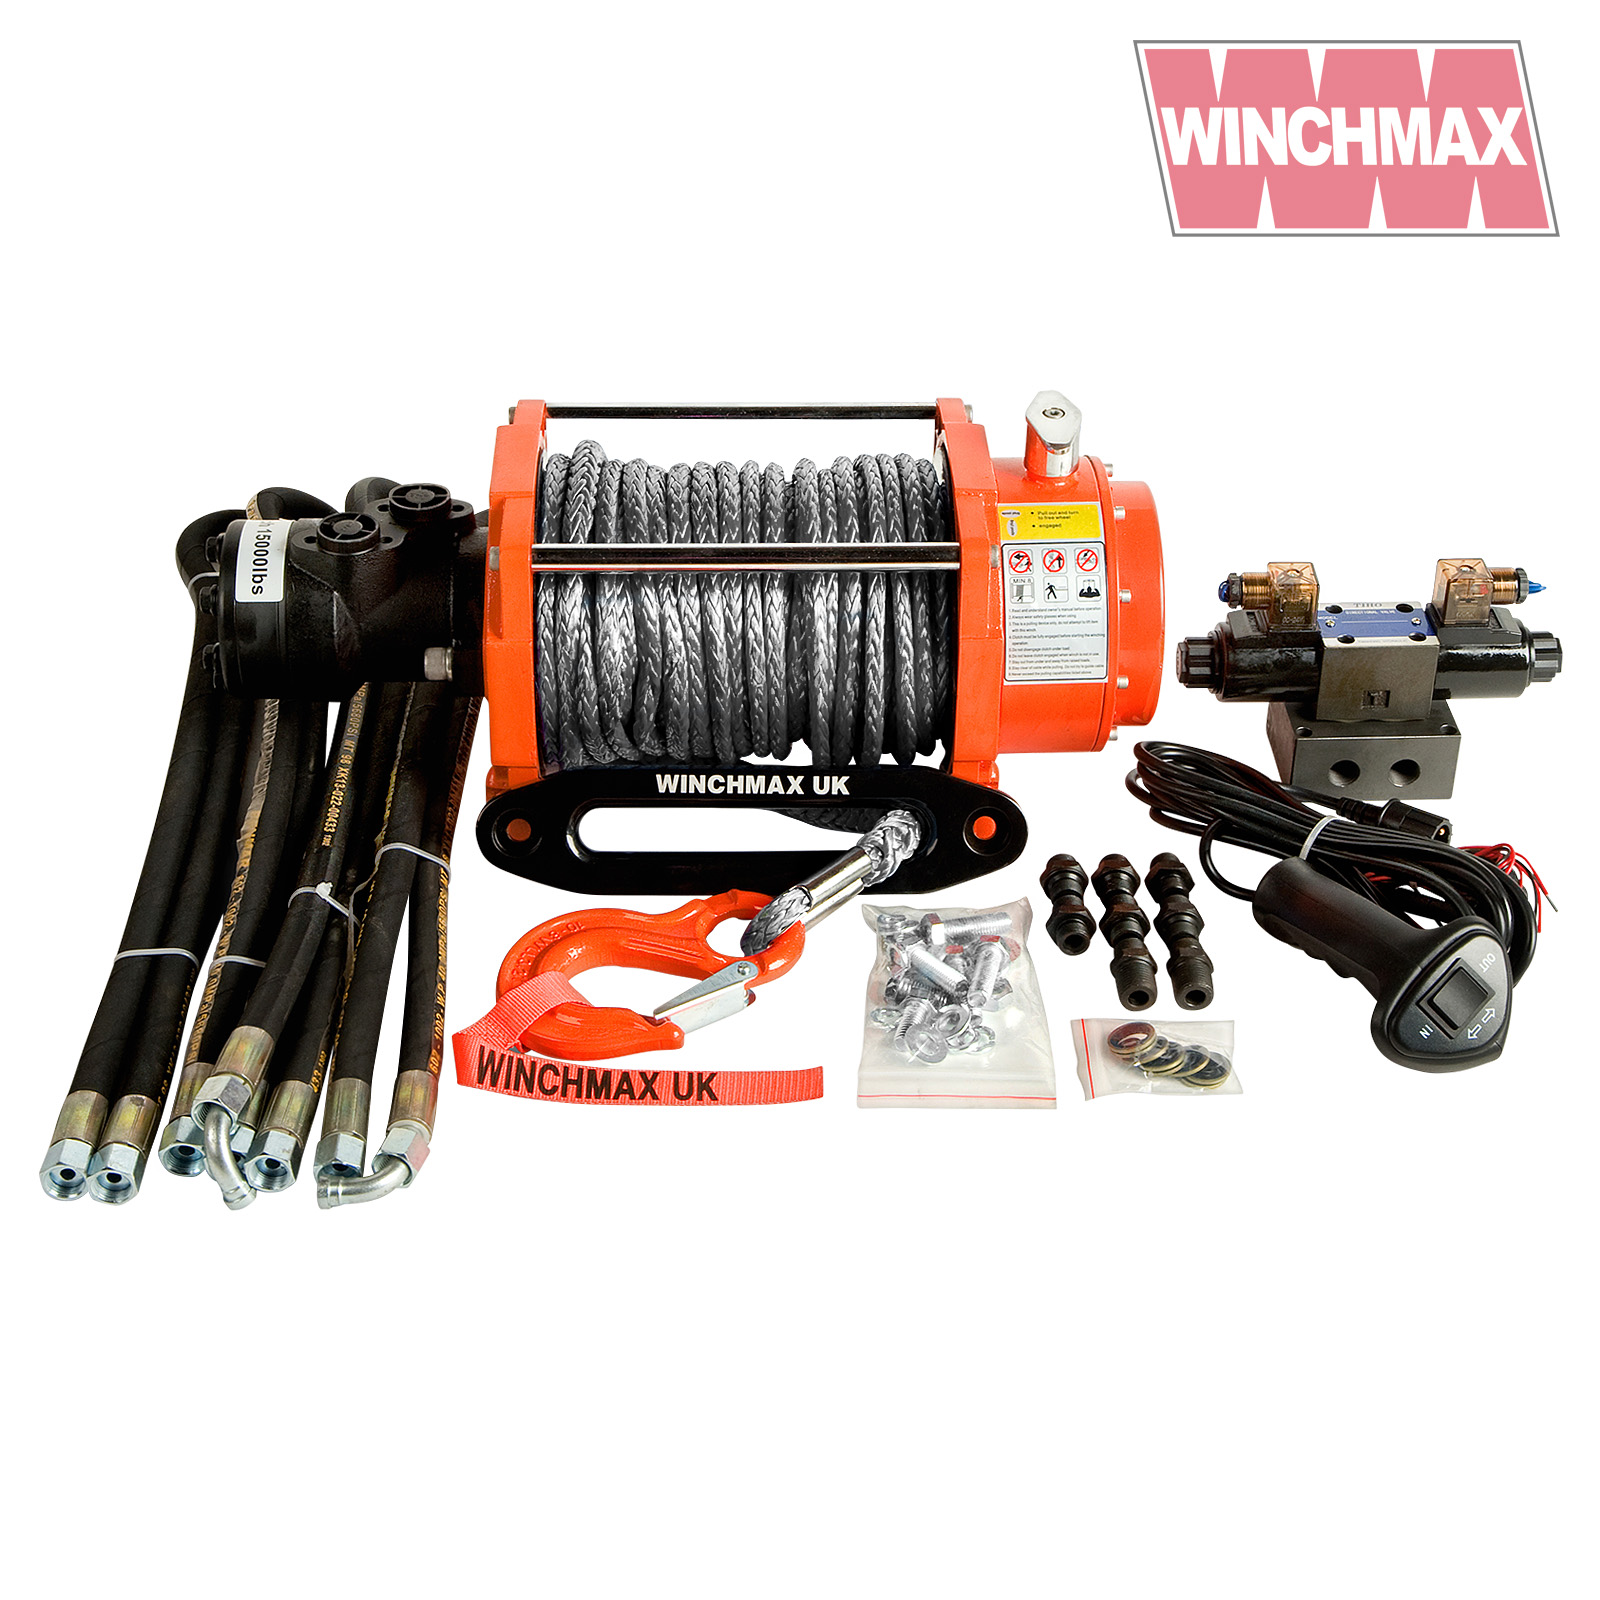 Winchmax 10000lb Hydraulic Winch with Dyneema Rope and Full Control System